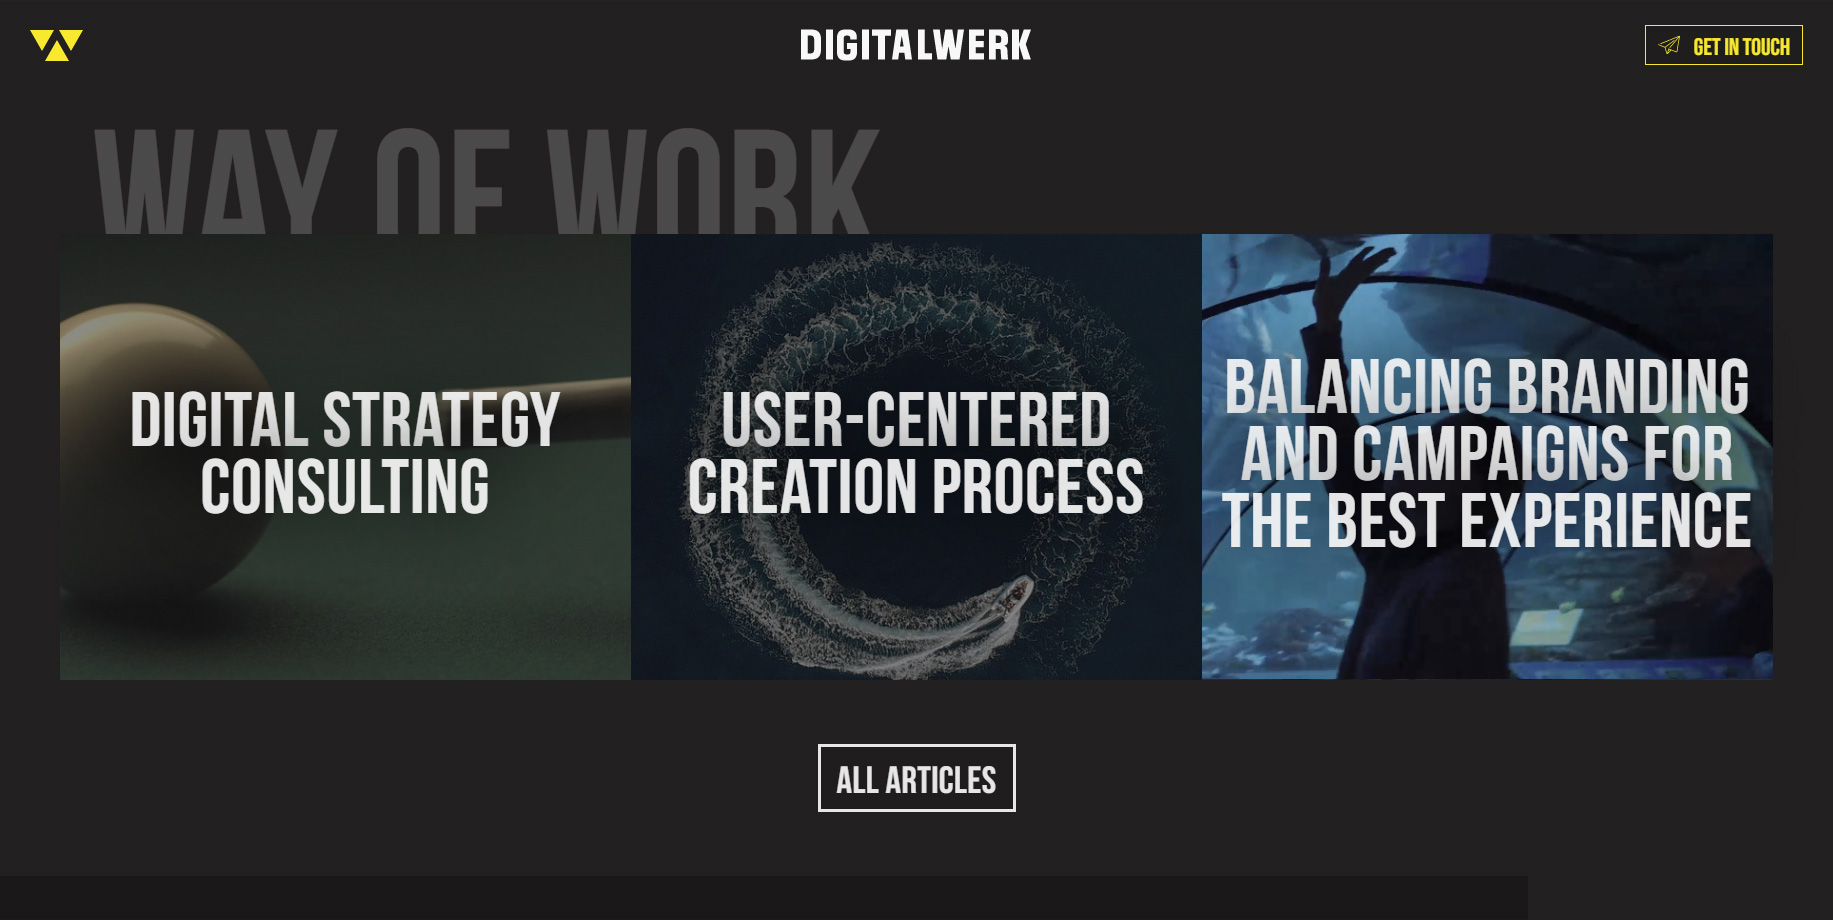 Digitalwerk - Website of the Day